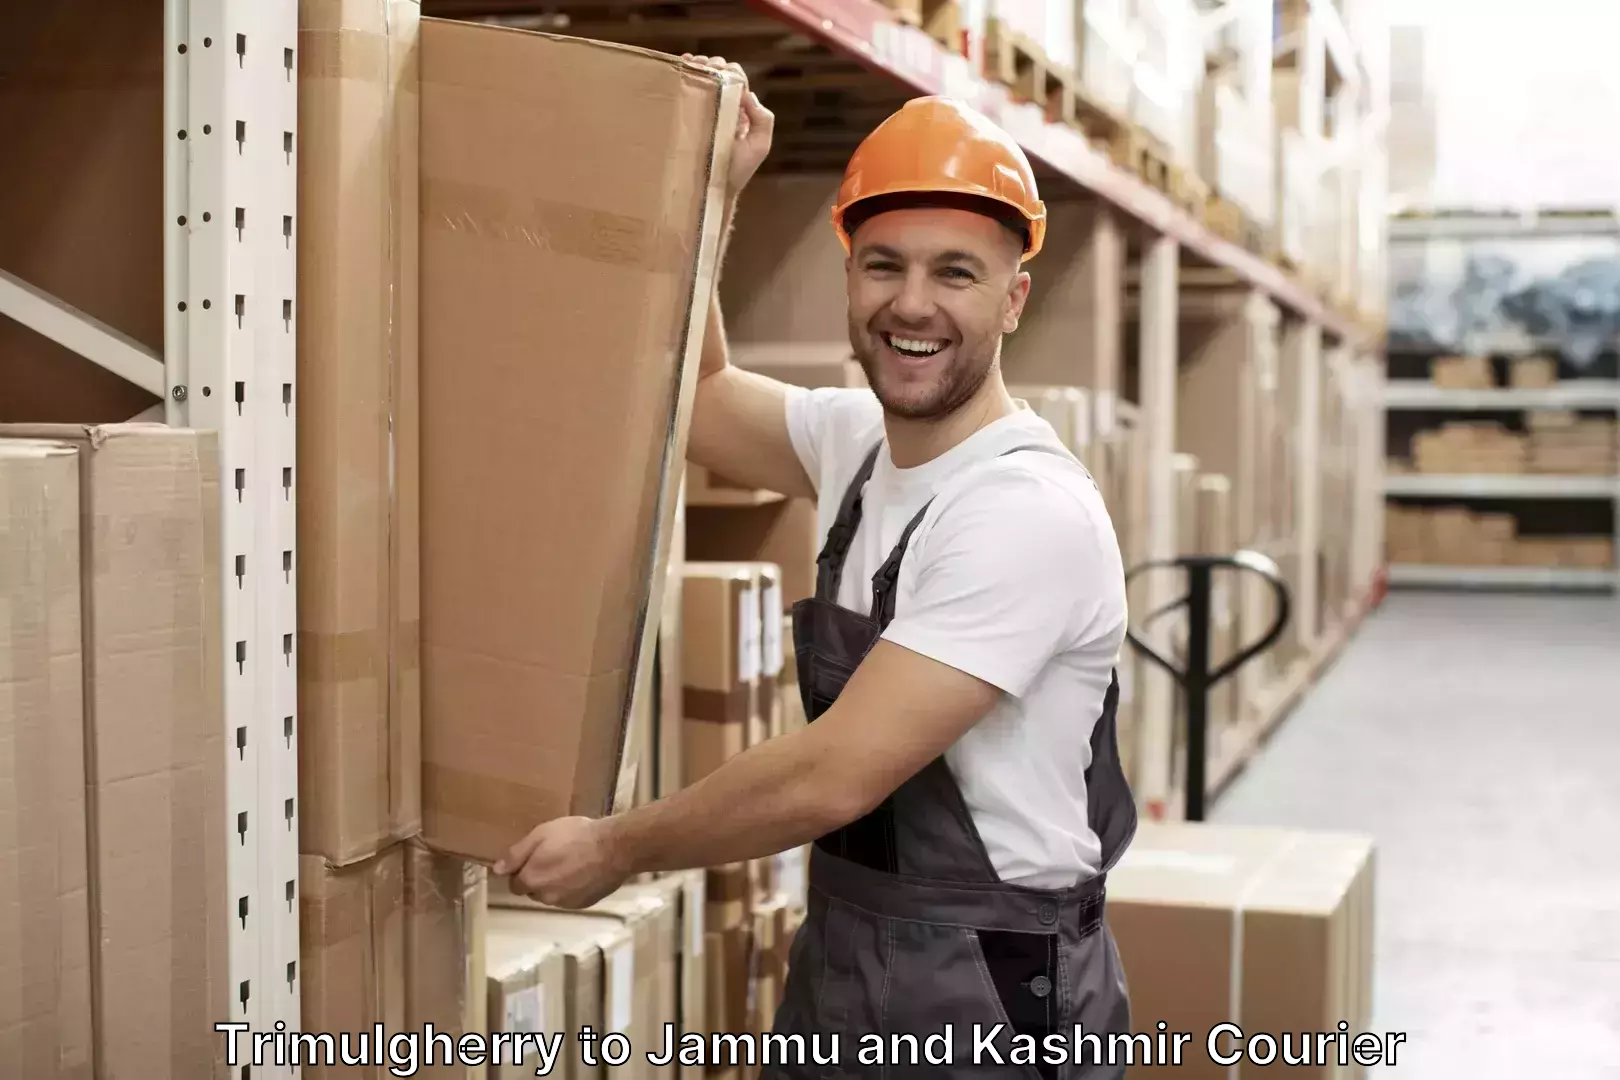 Luggage shipment tracking Trimulgherry to Srinagar Kashmir